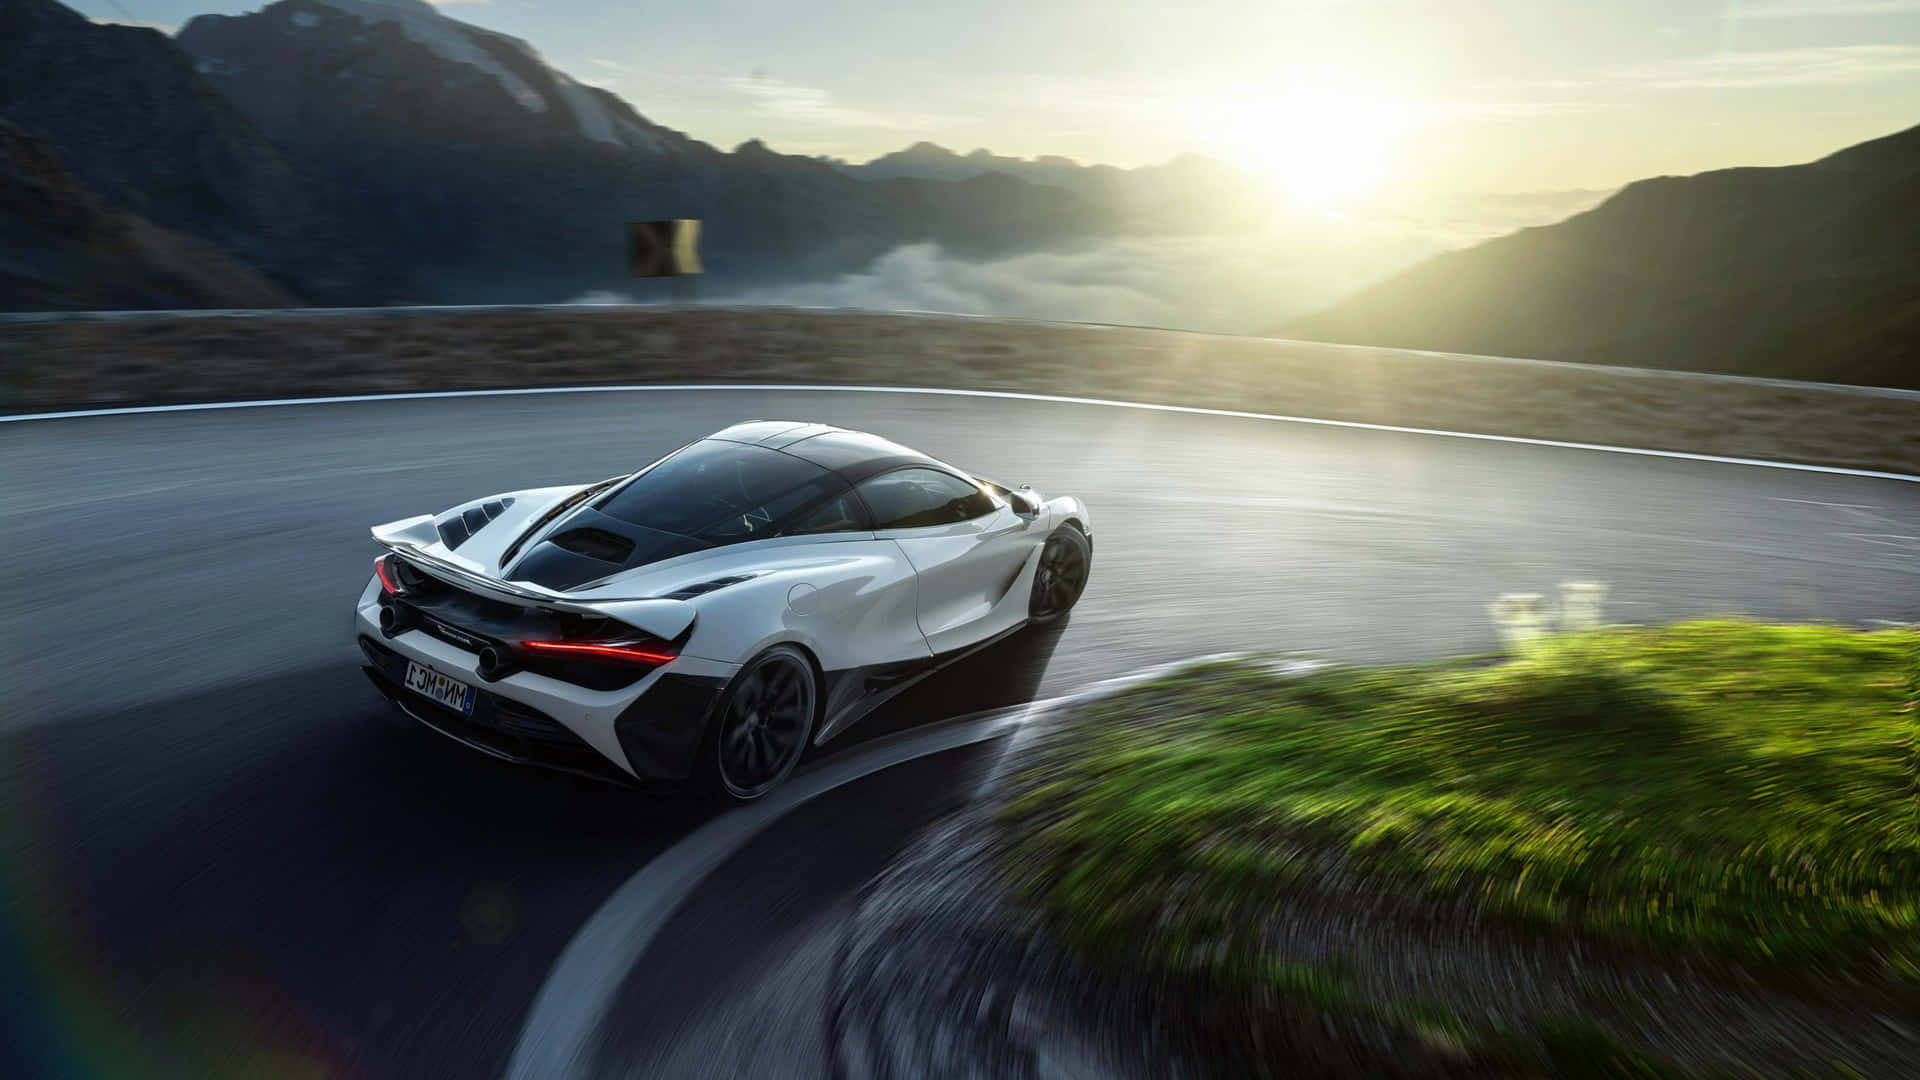 Luxury meets performance with the 4K McLaren 720s.